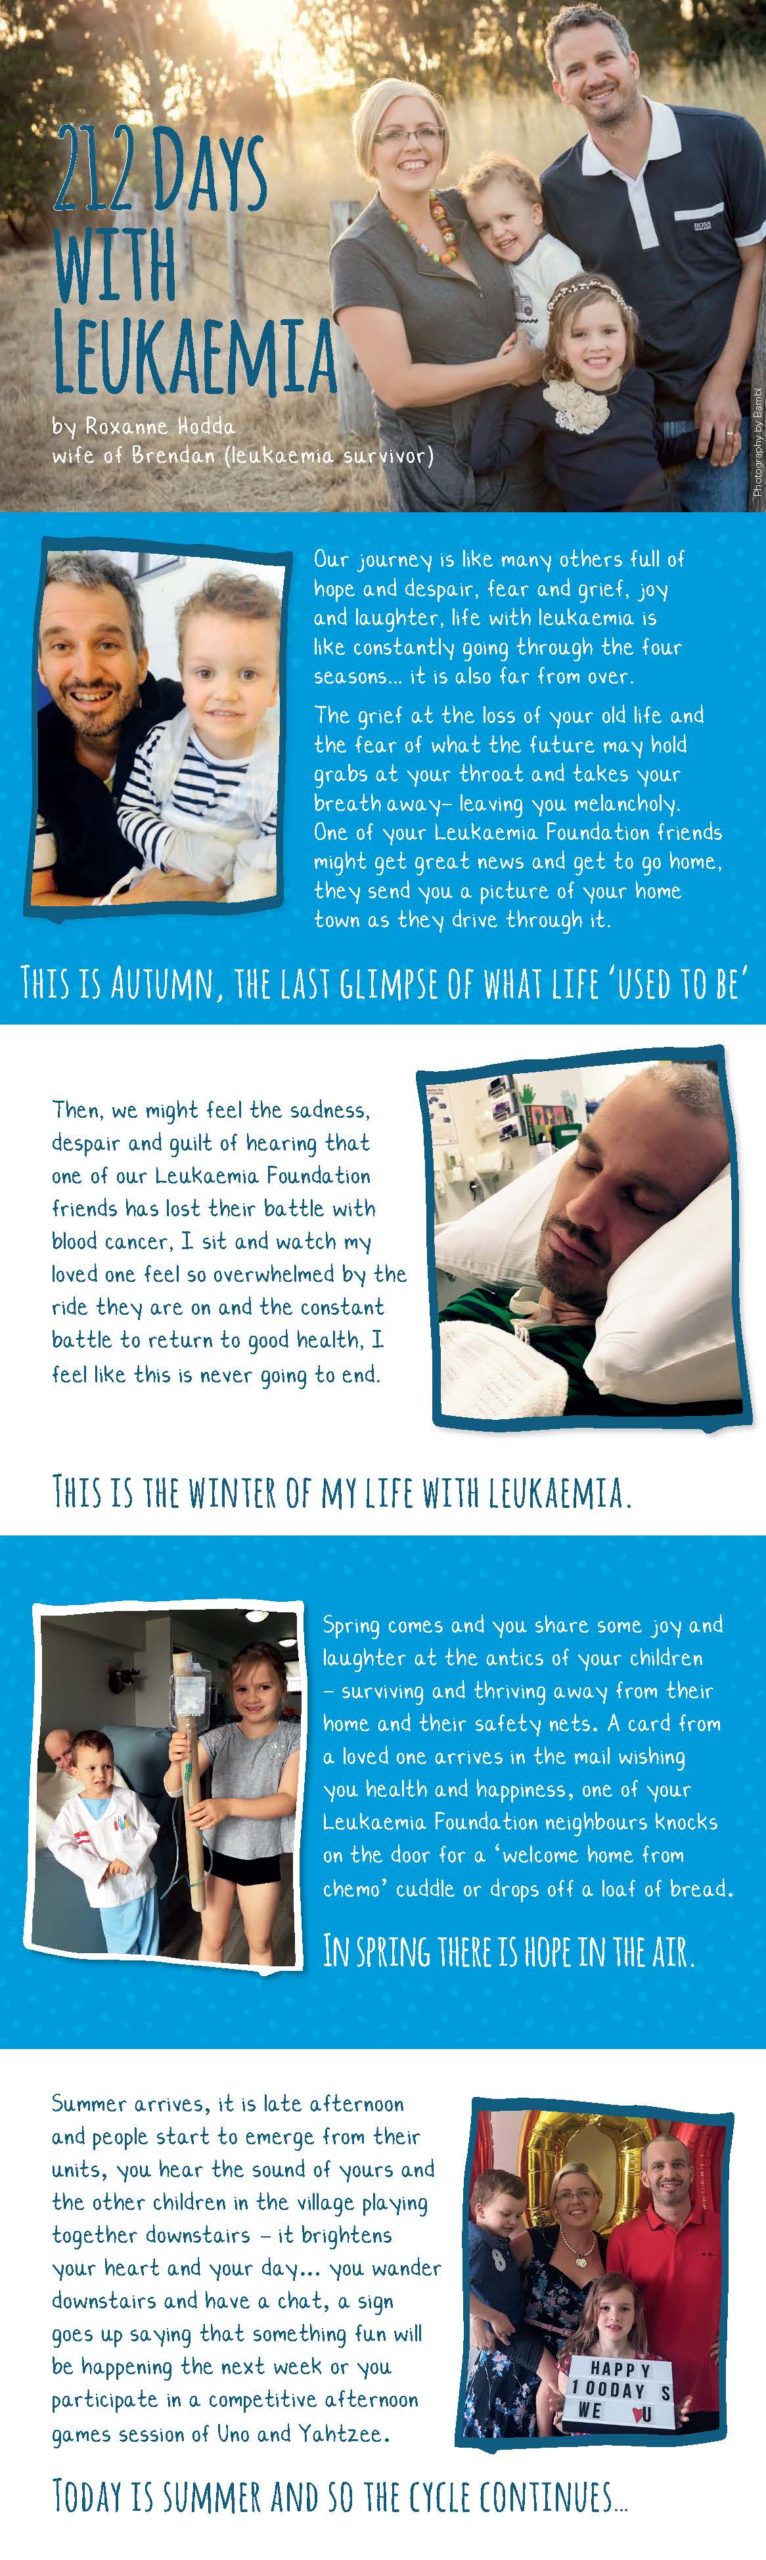 Life with leukaemia